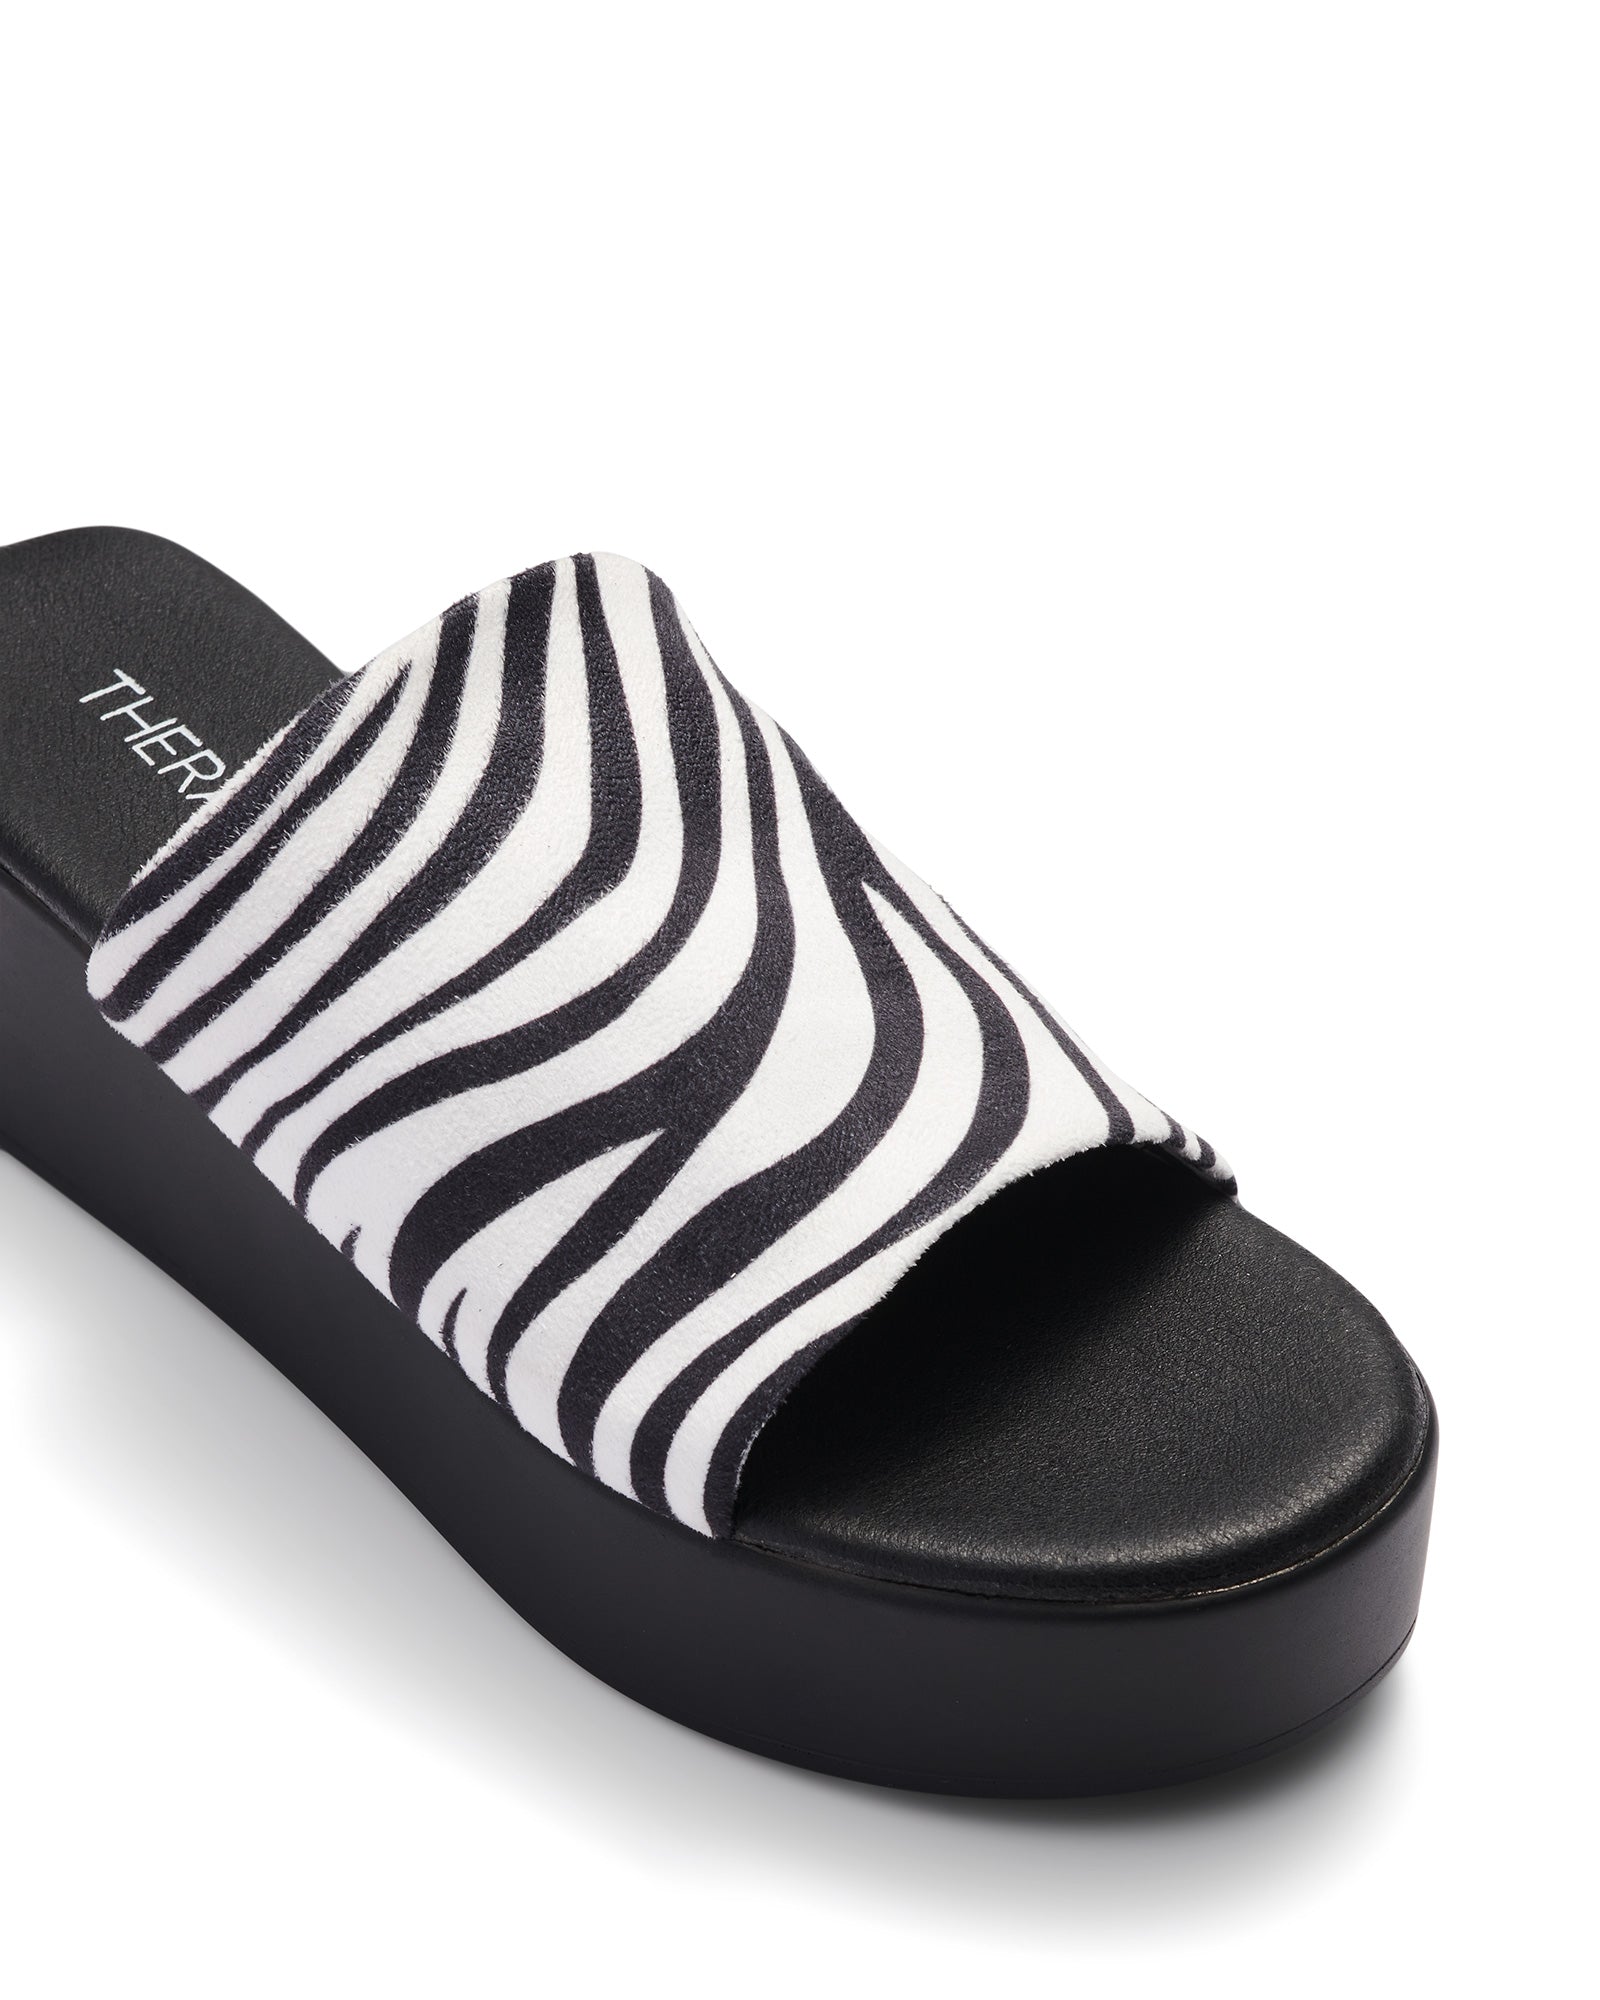 Therapy Shoes Livid Zebra | Women's Slides | Platforms | Sandals 